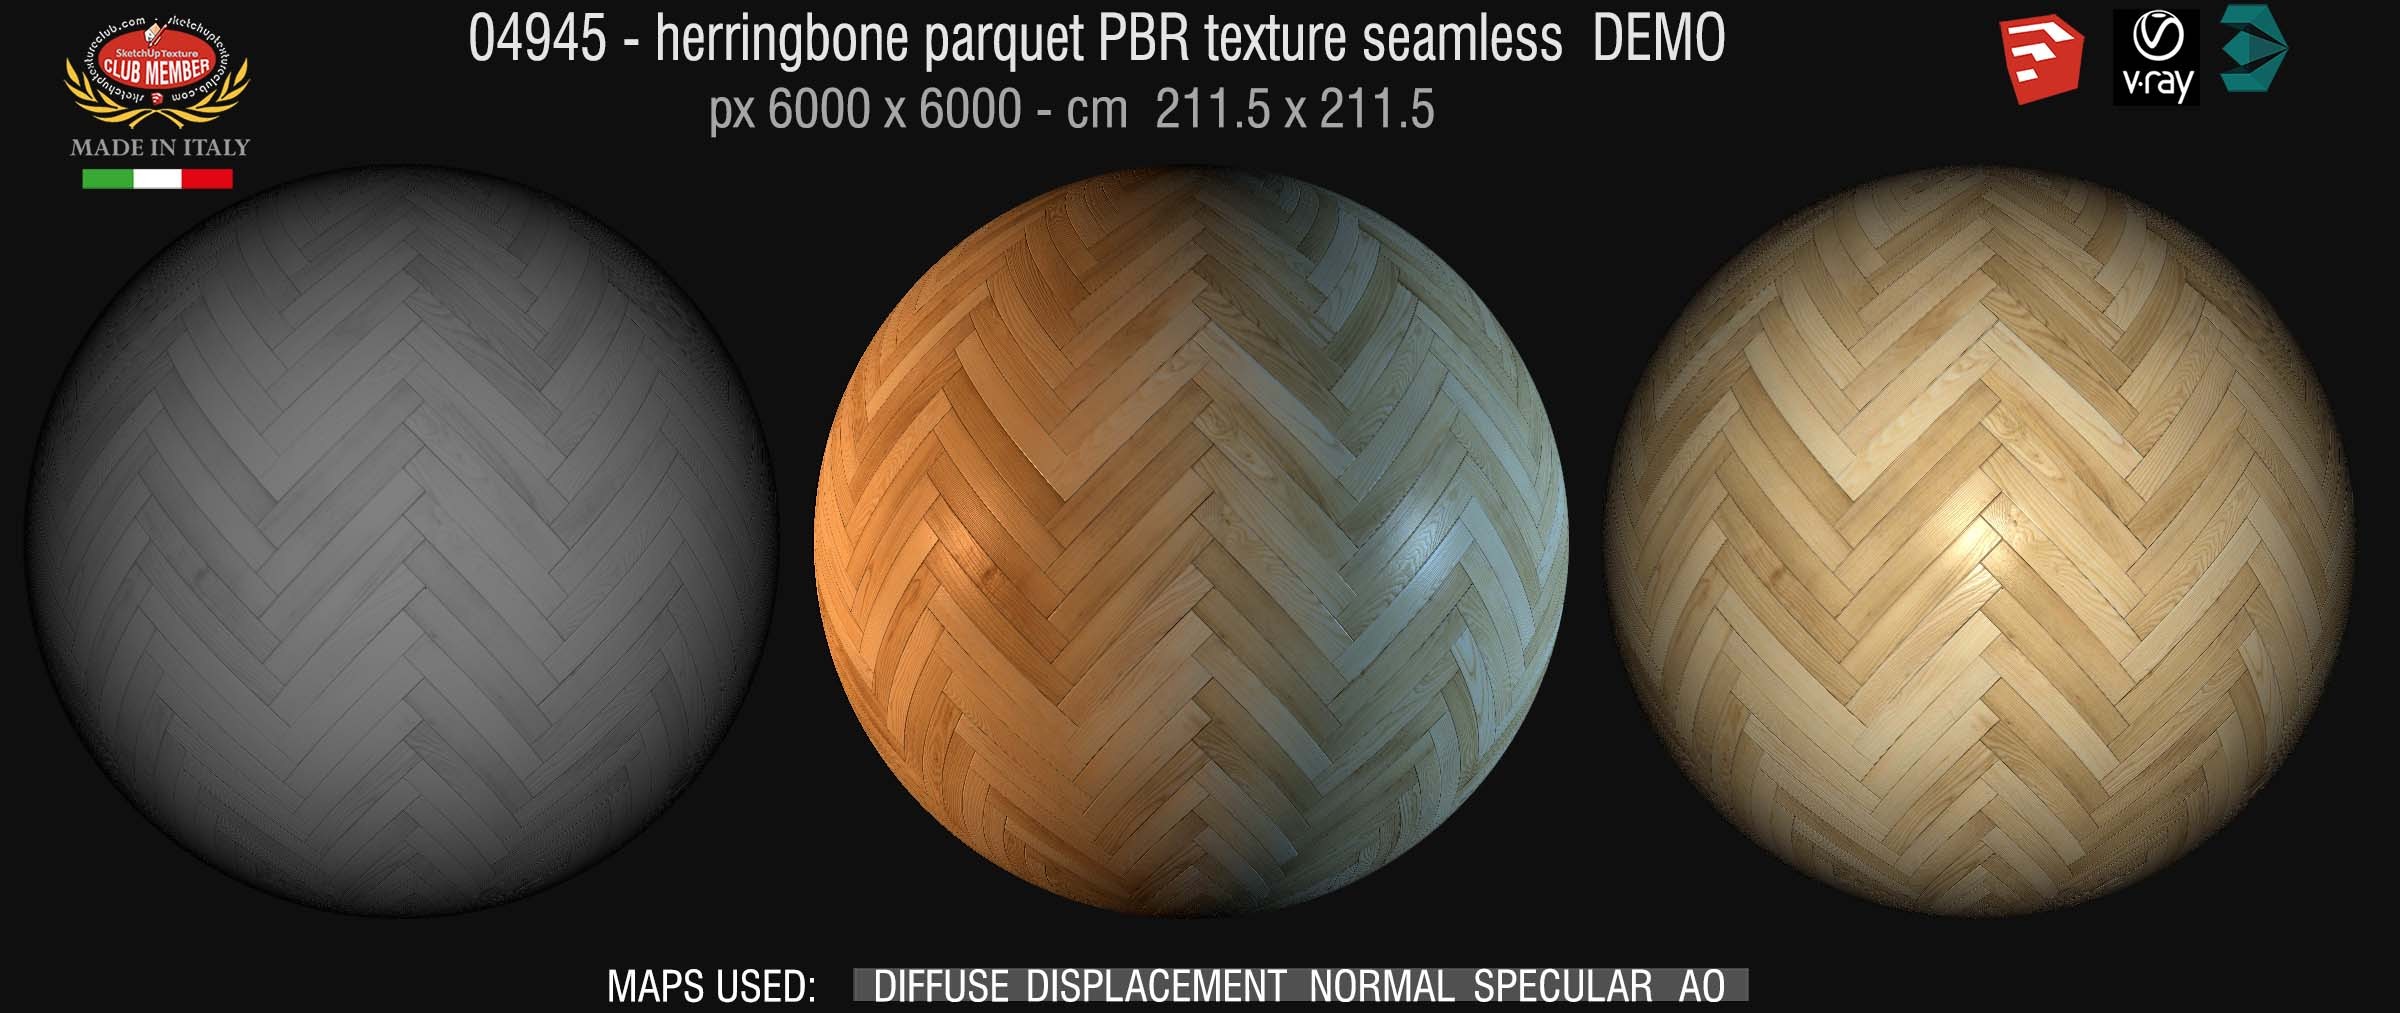 04945 Herringbone parquet PBR texture seamless DEMO